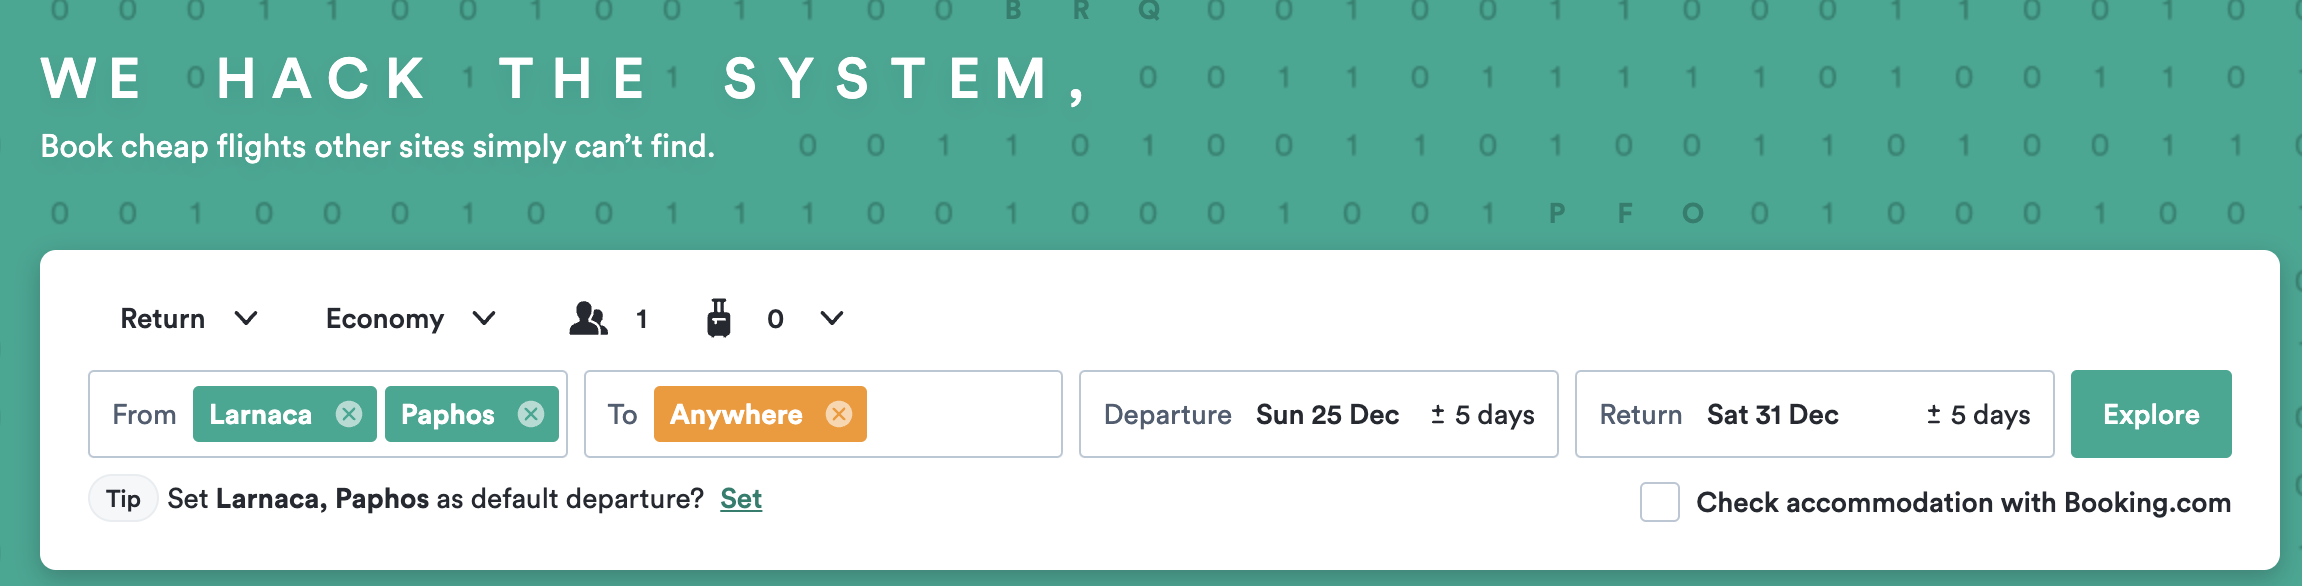 We Hack the System (kiwi.com)